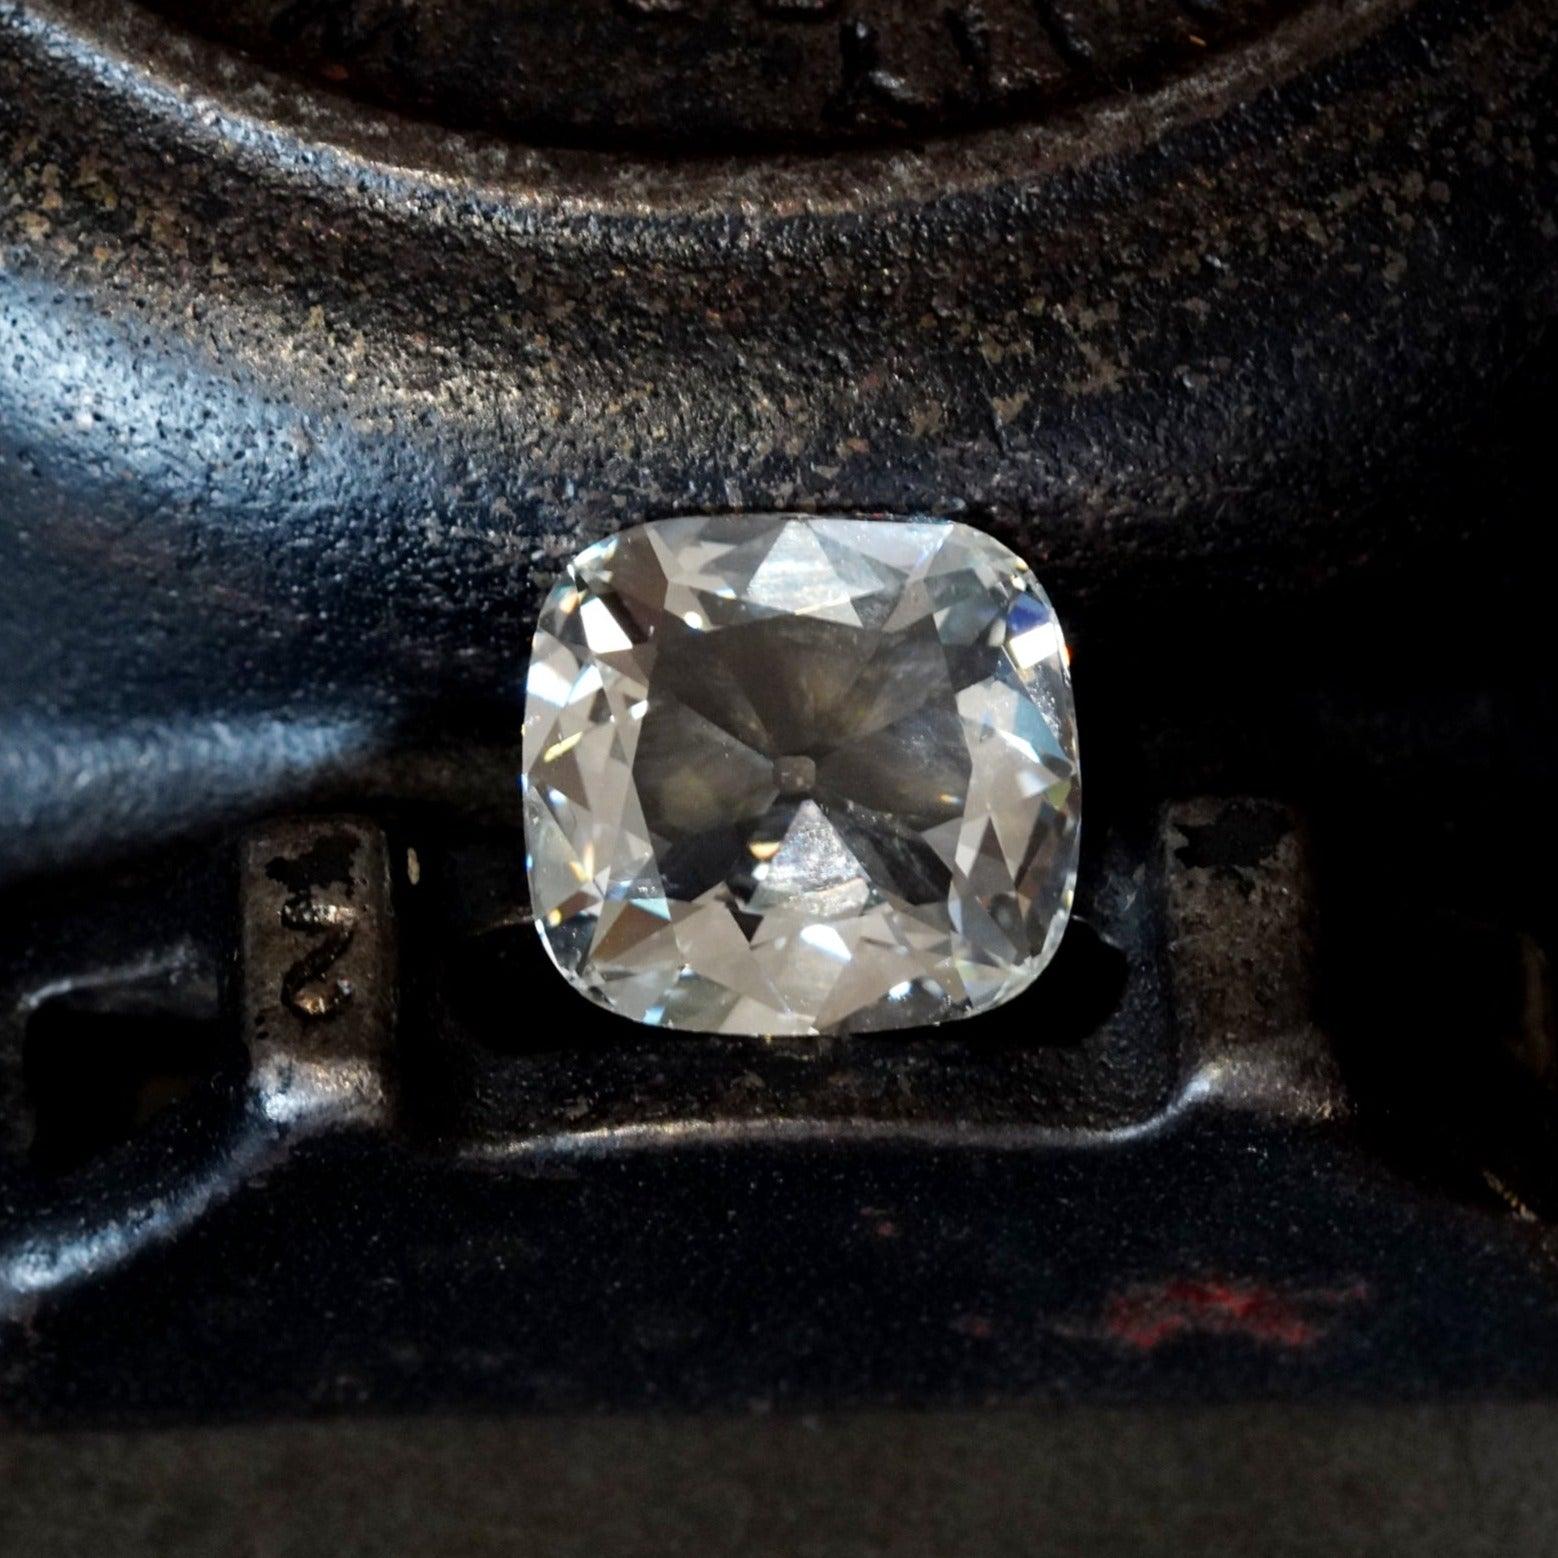 Exquisite 8.12 Carat H, SI1 Diamond - Cushion Cut - Jogani